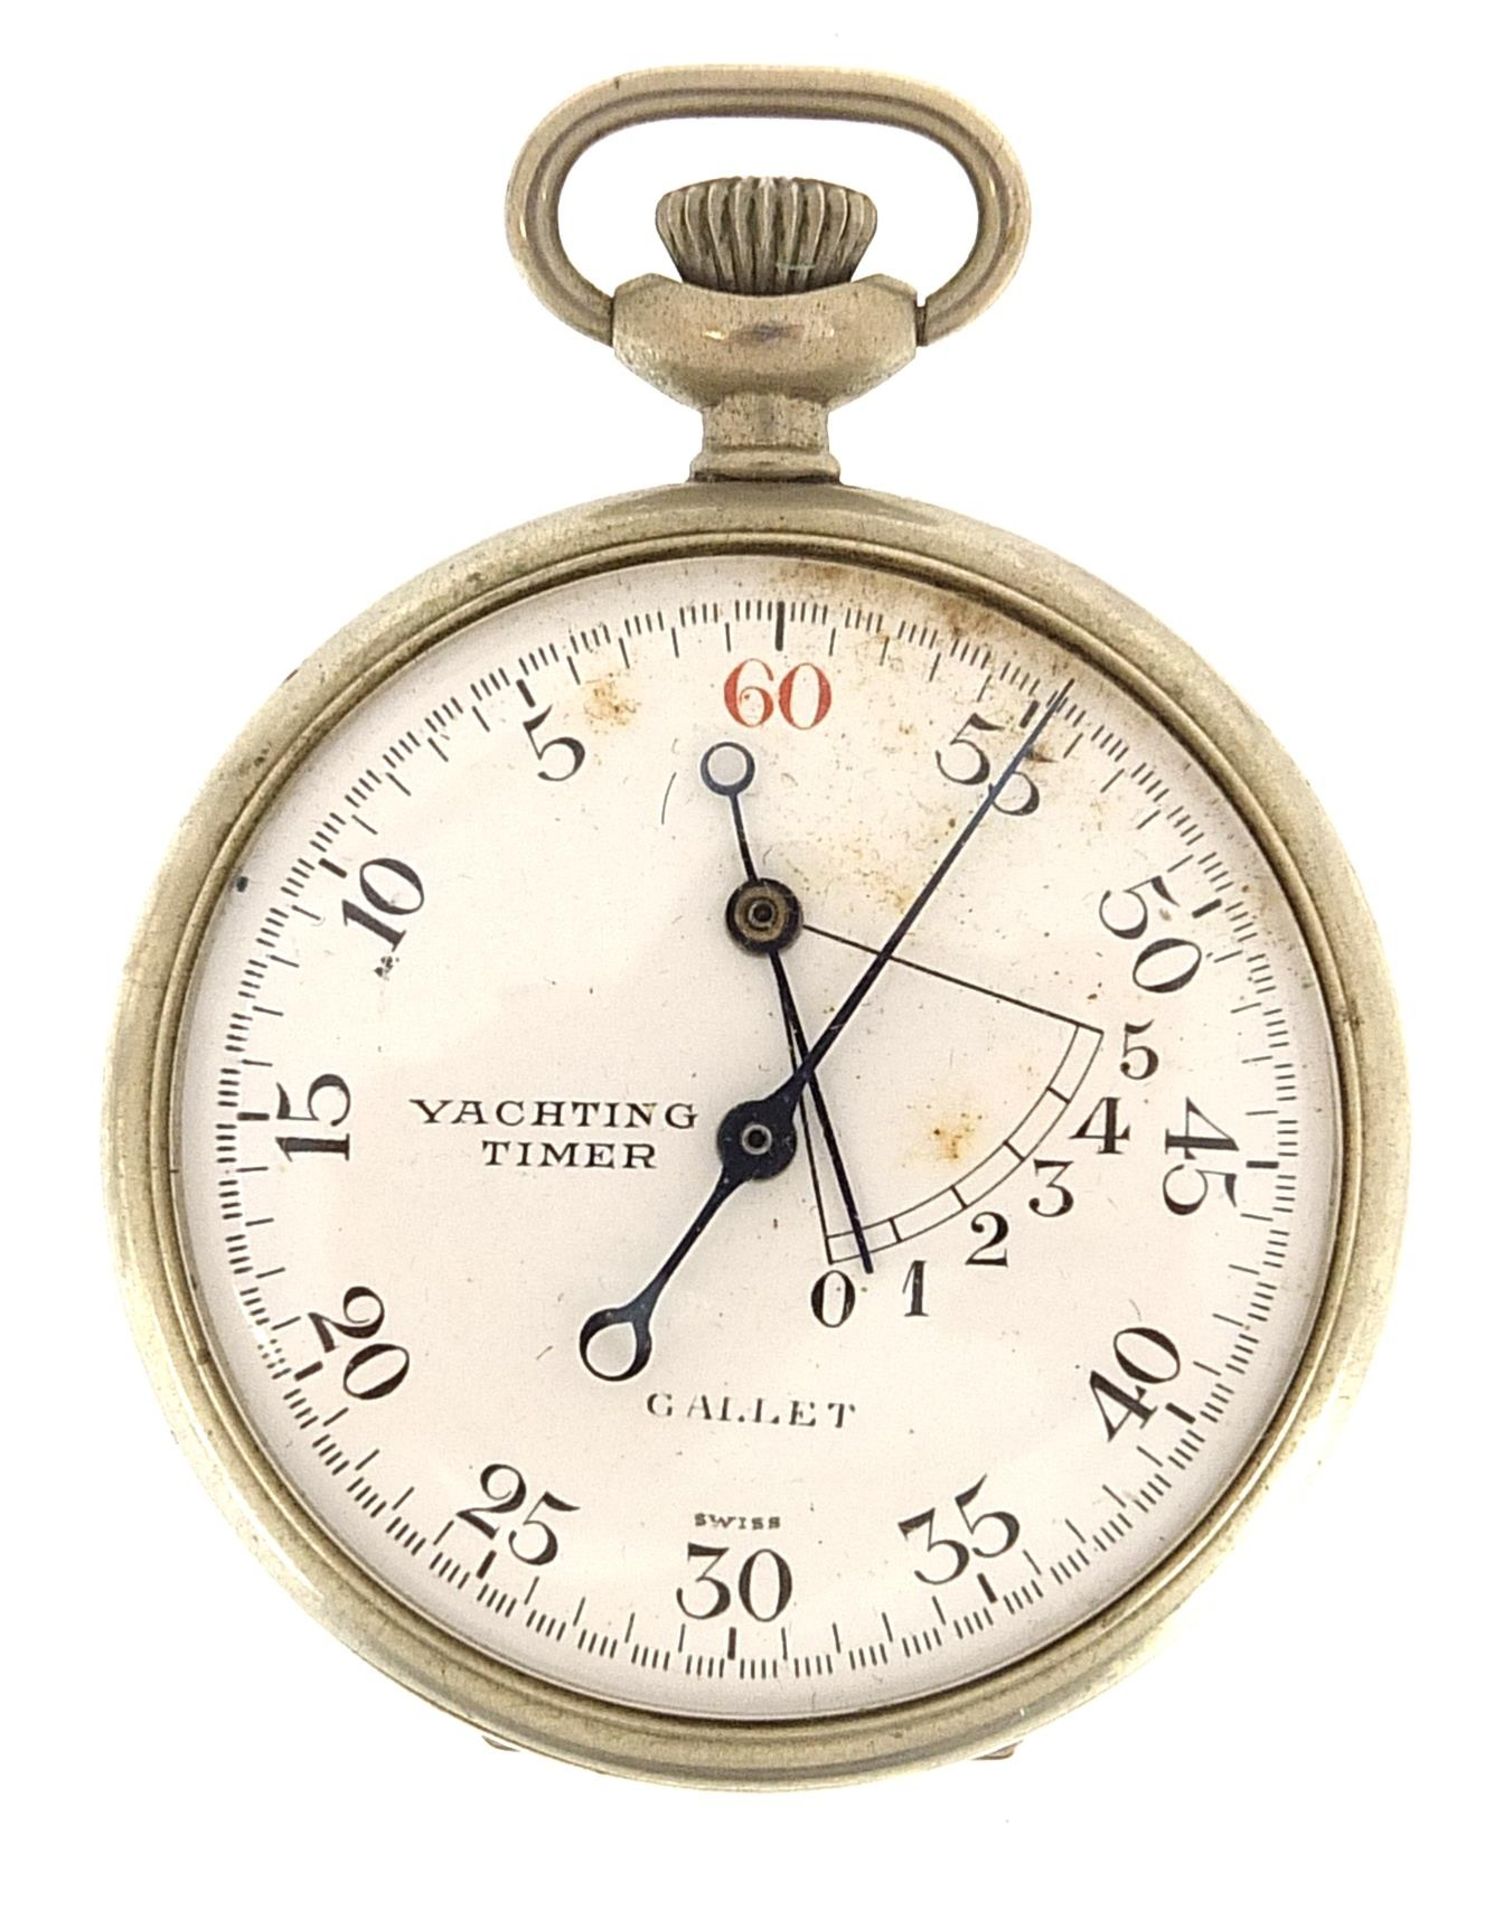 Vintage Gallet Swiss yachting timer, 47mm in diameter